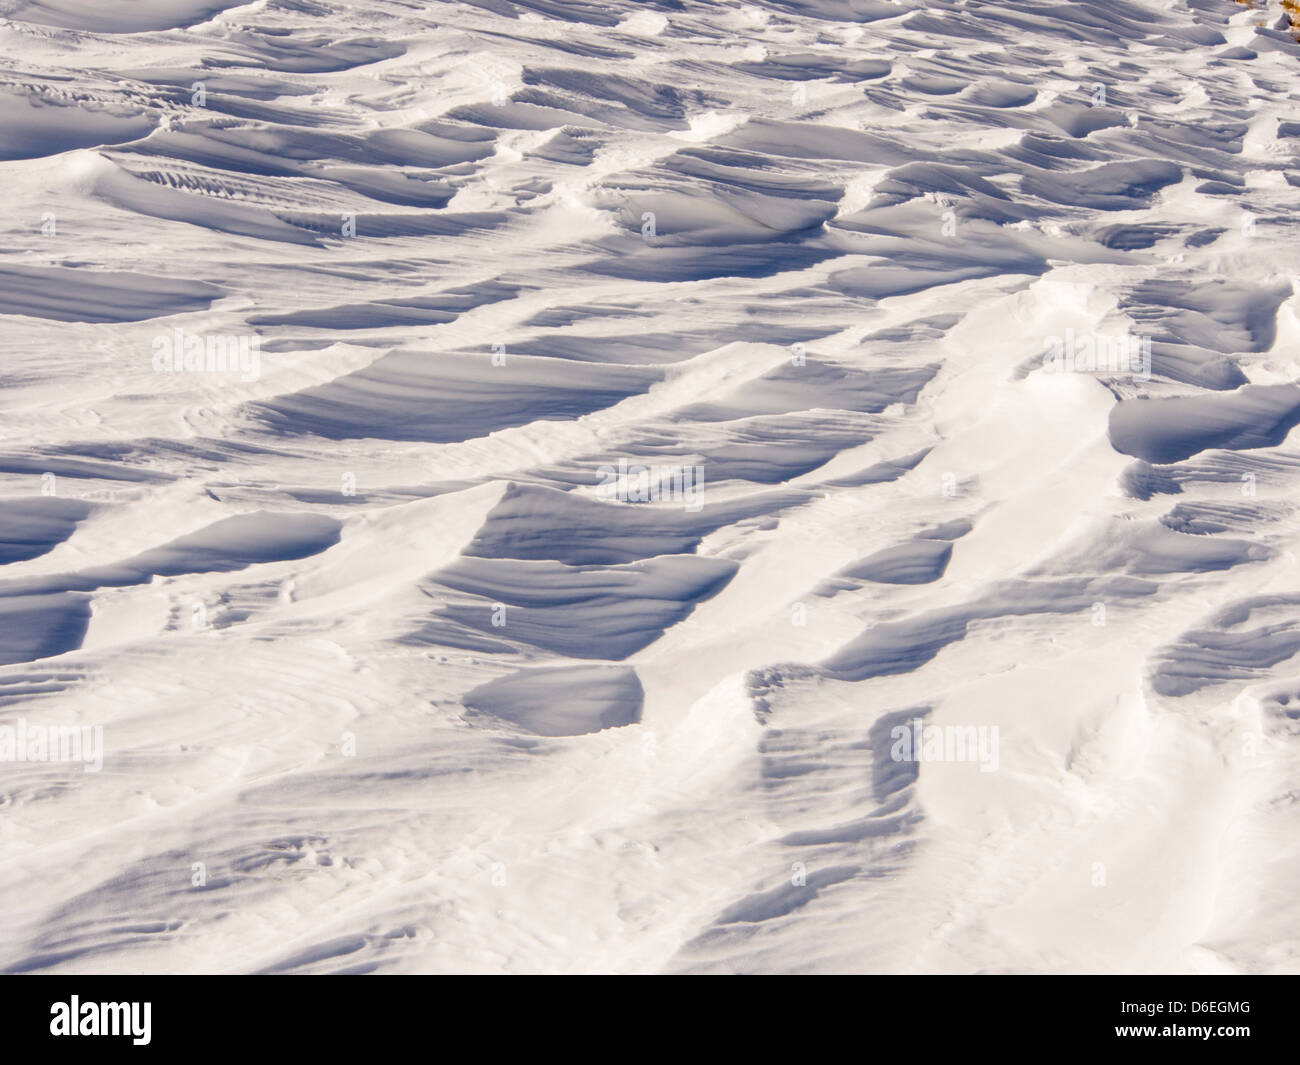 Sastrugi caused by wind scour on snow, Lake District, UK Stock Photo ...